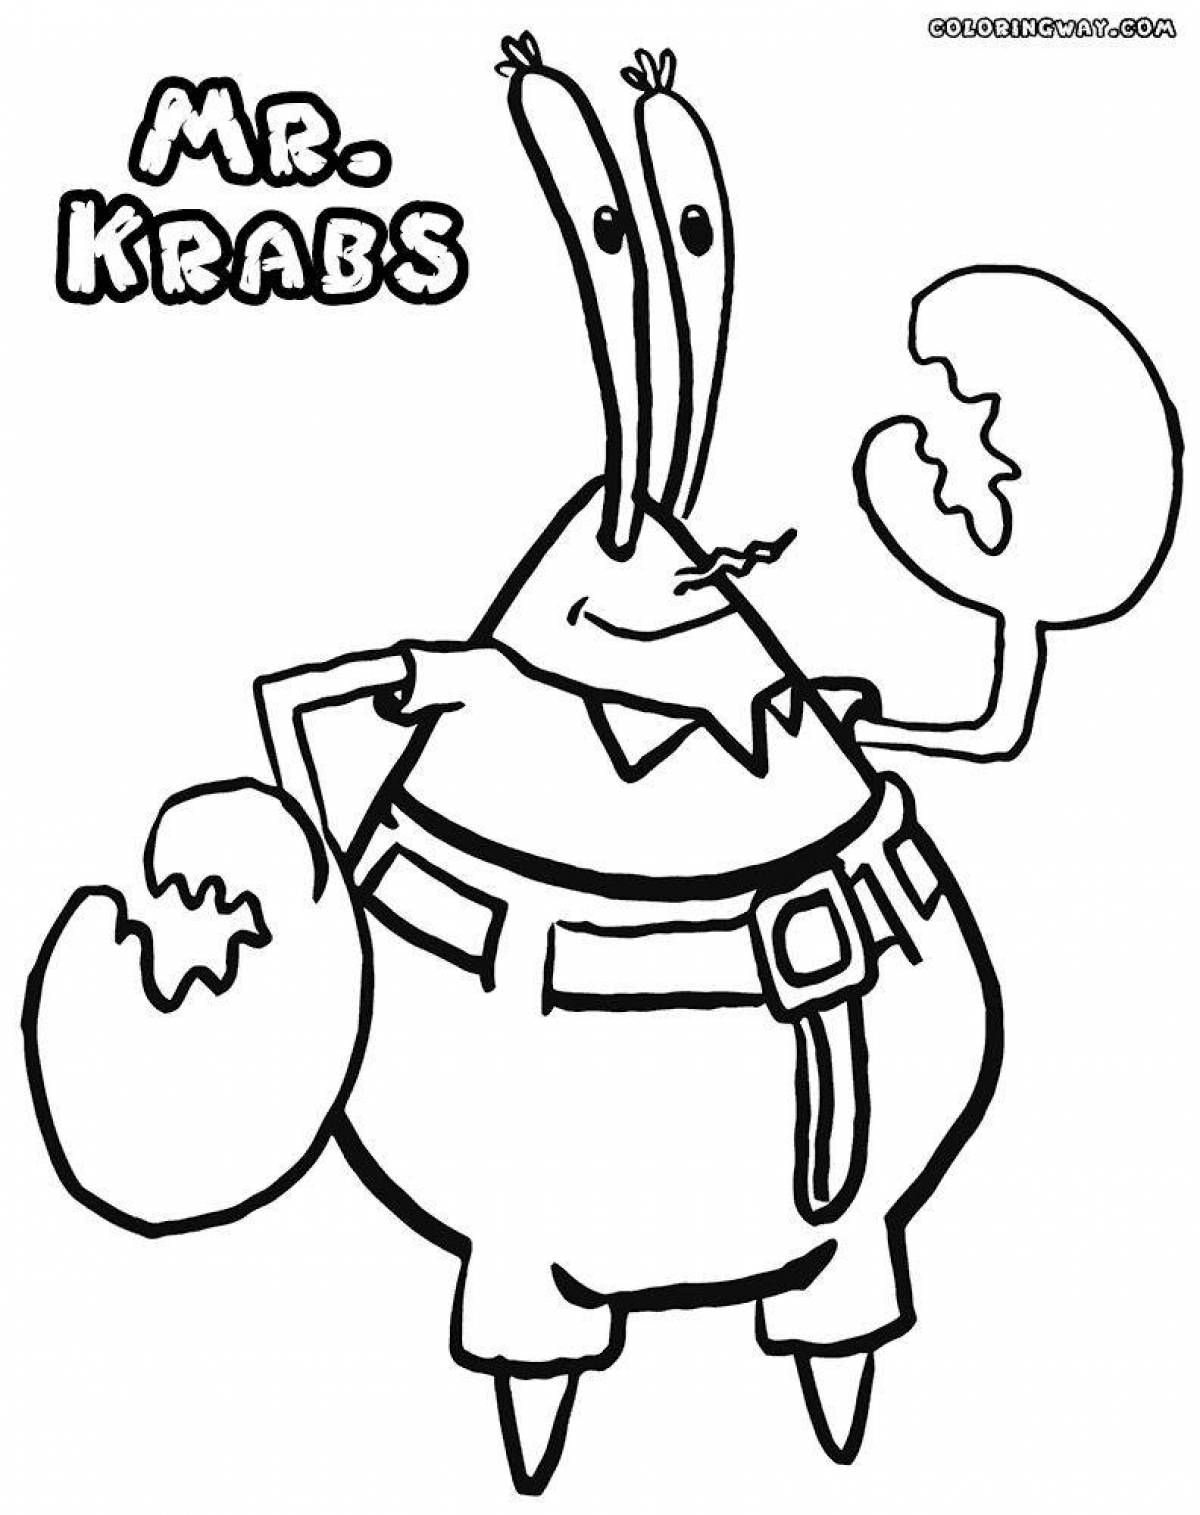 Imaginative mr krabs coloring page